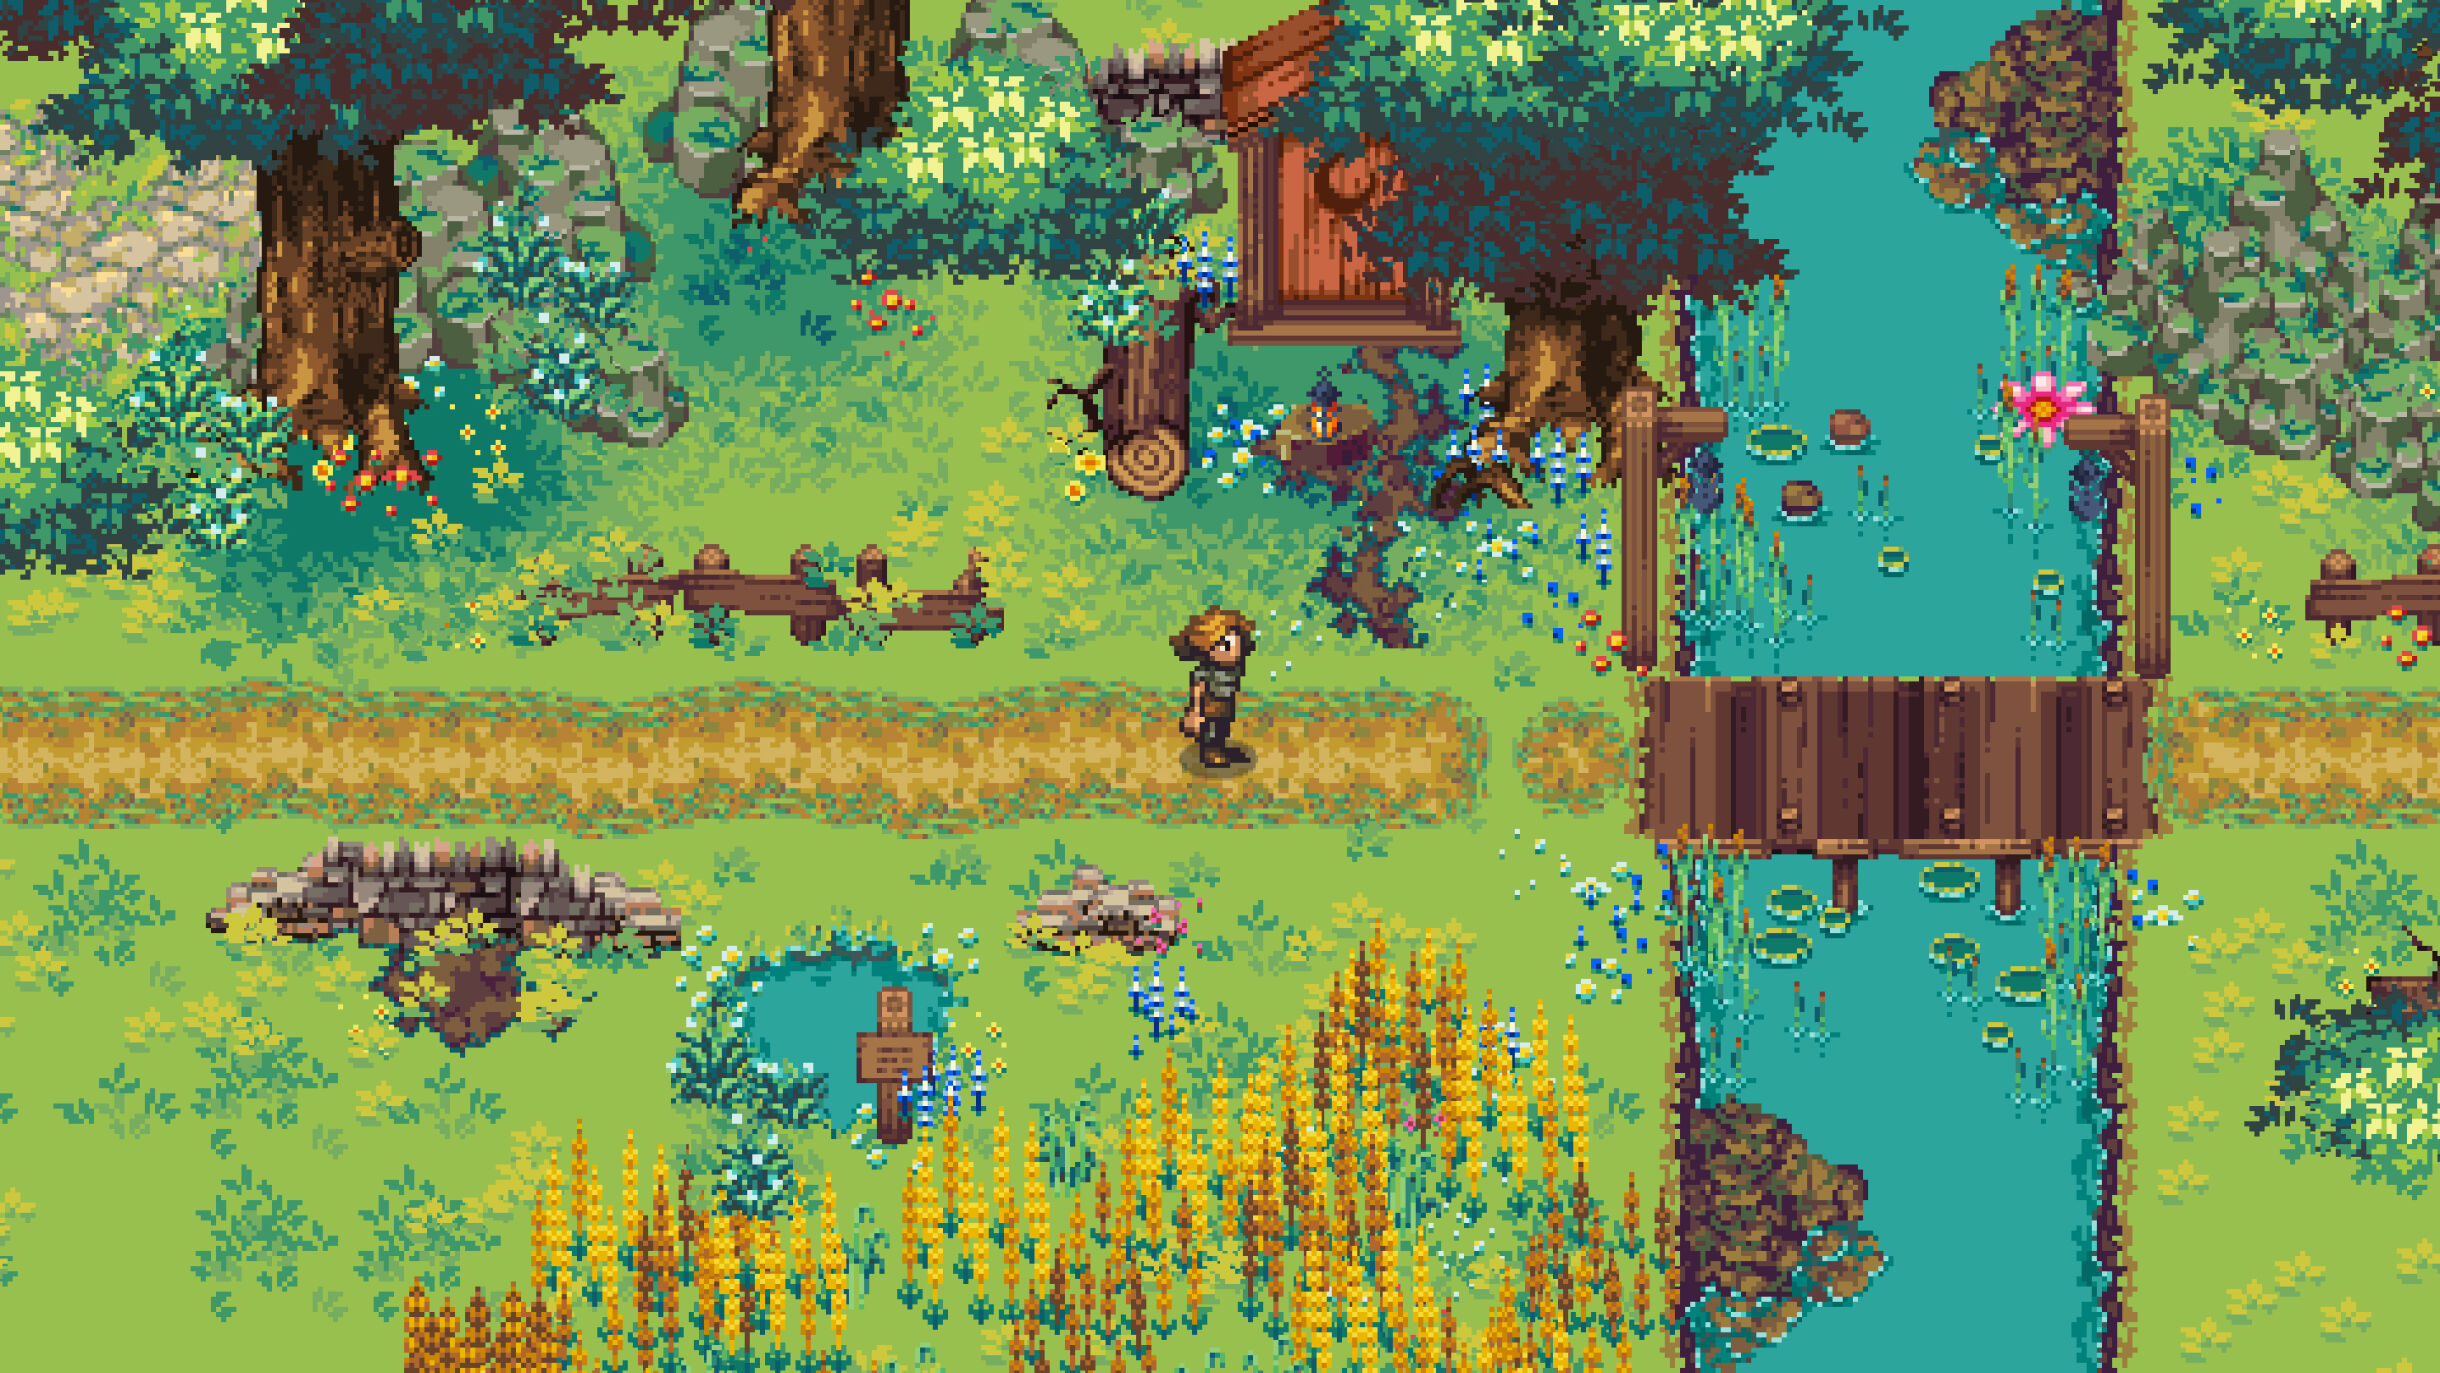 Kynseed: Pixel Art Sandbox RPG from Fable Developers